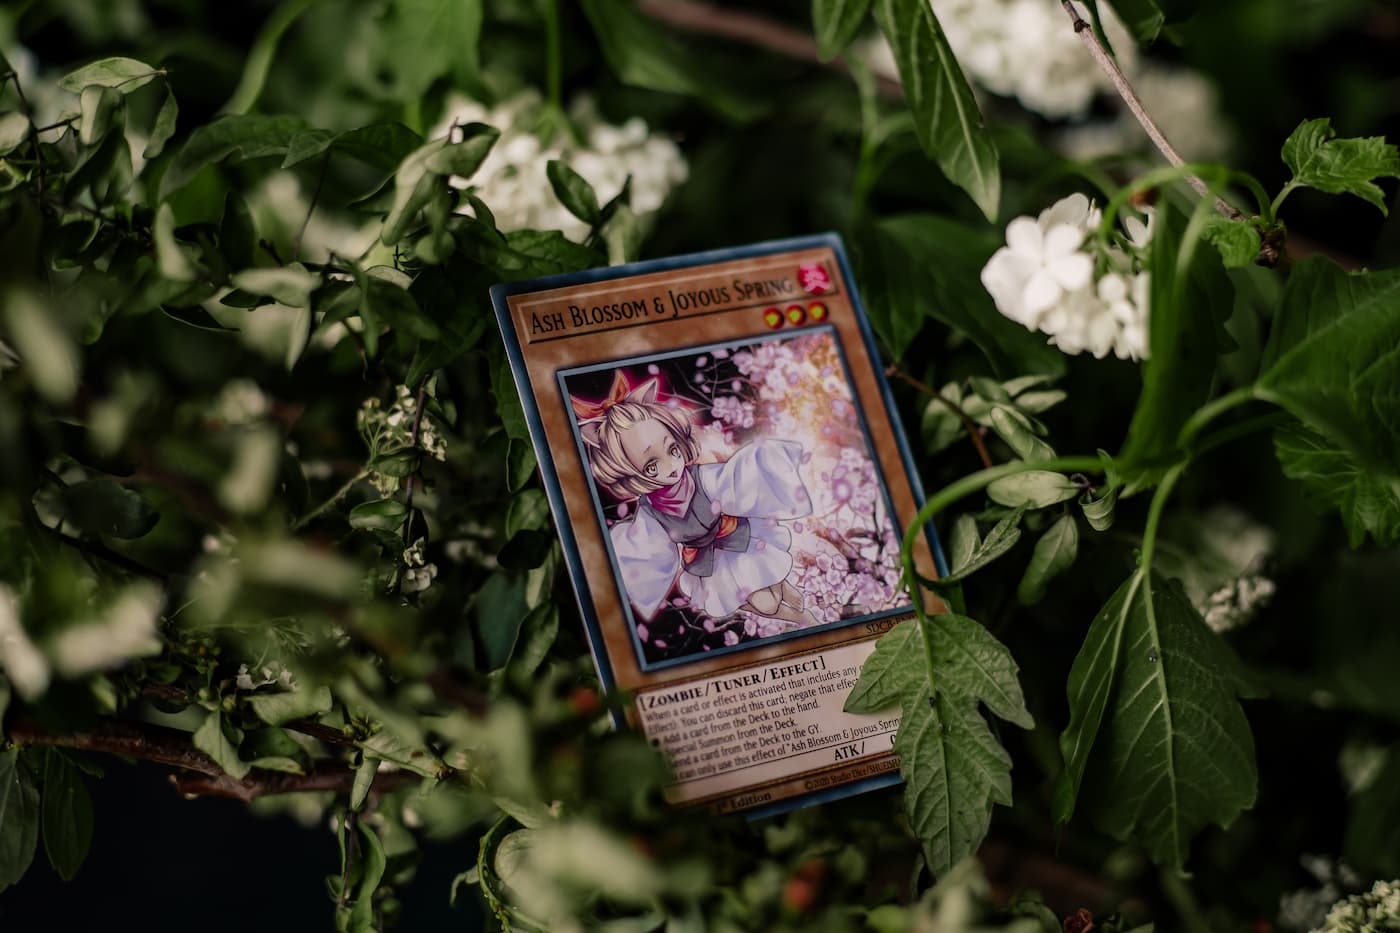 Ash Blossom & Joyous Spring Yu-Gi-Oh! Card